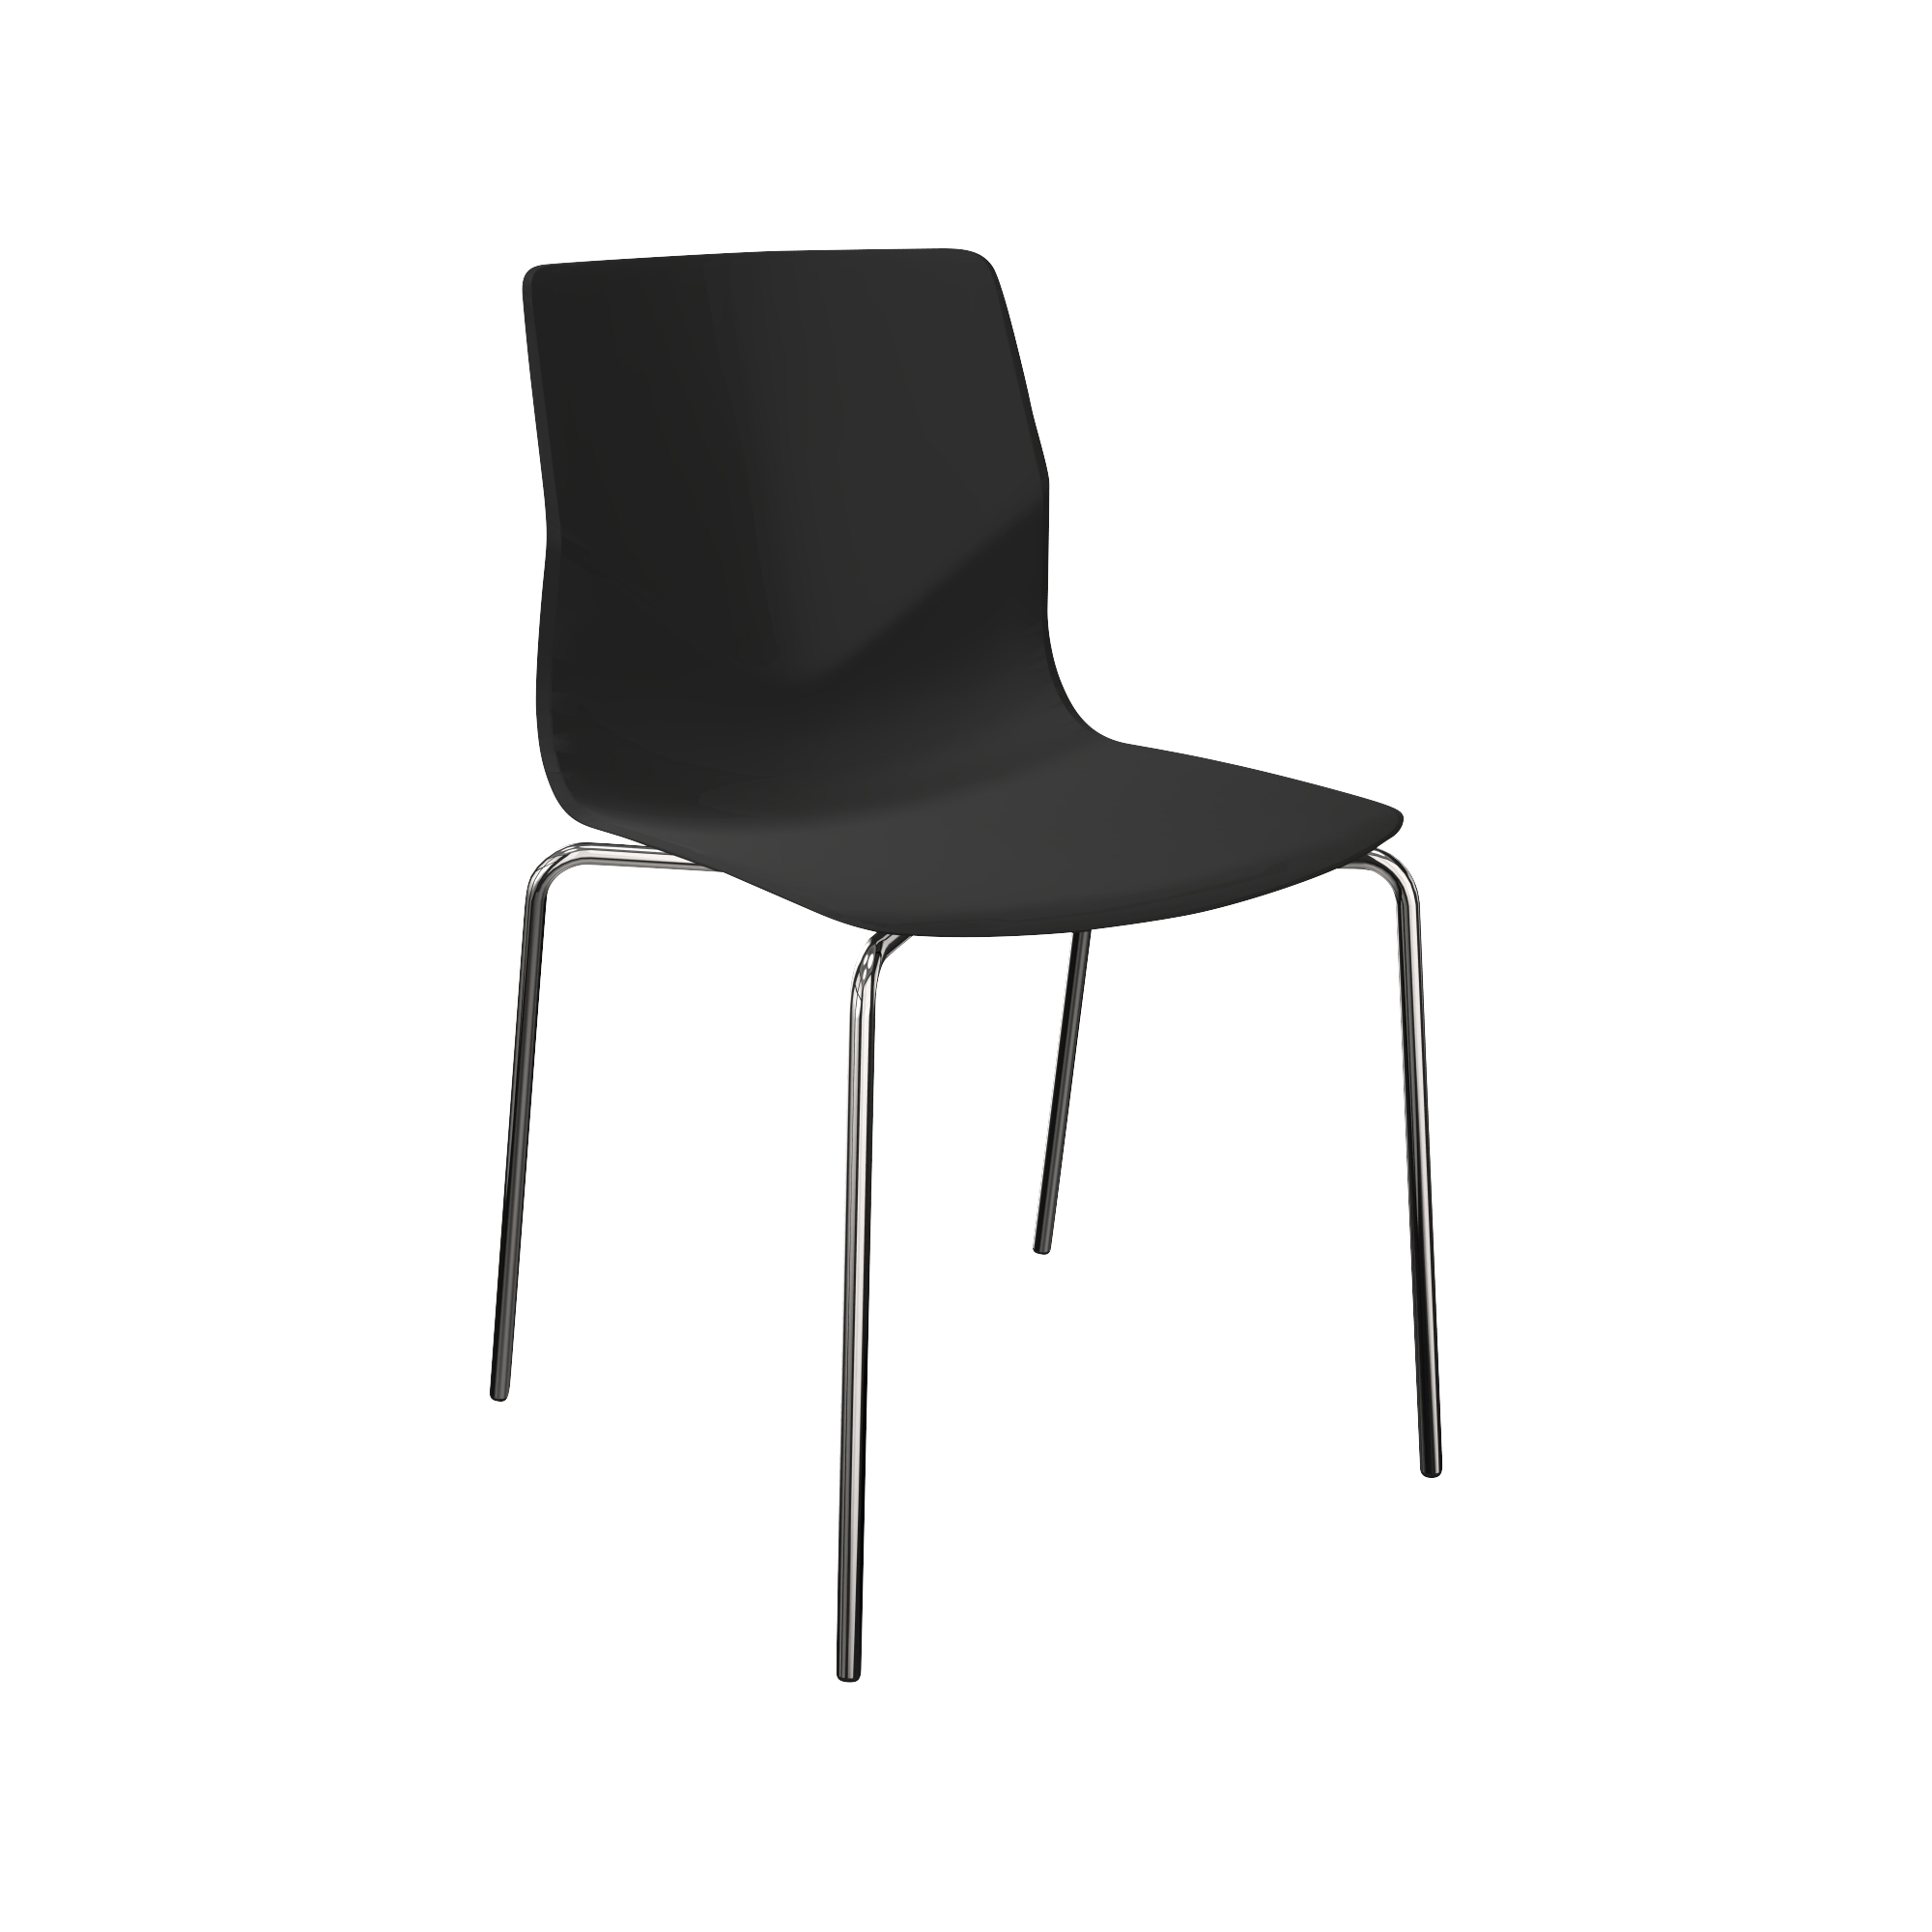 A black chair with chrome legs